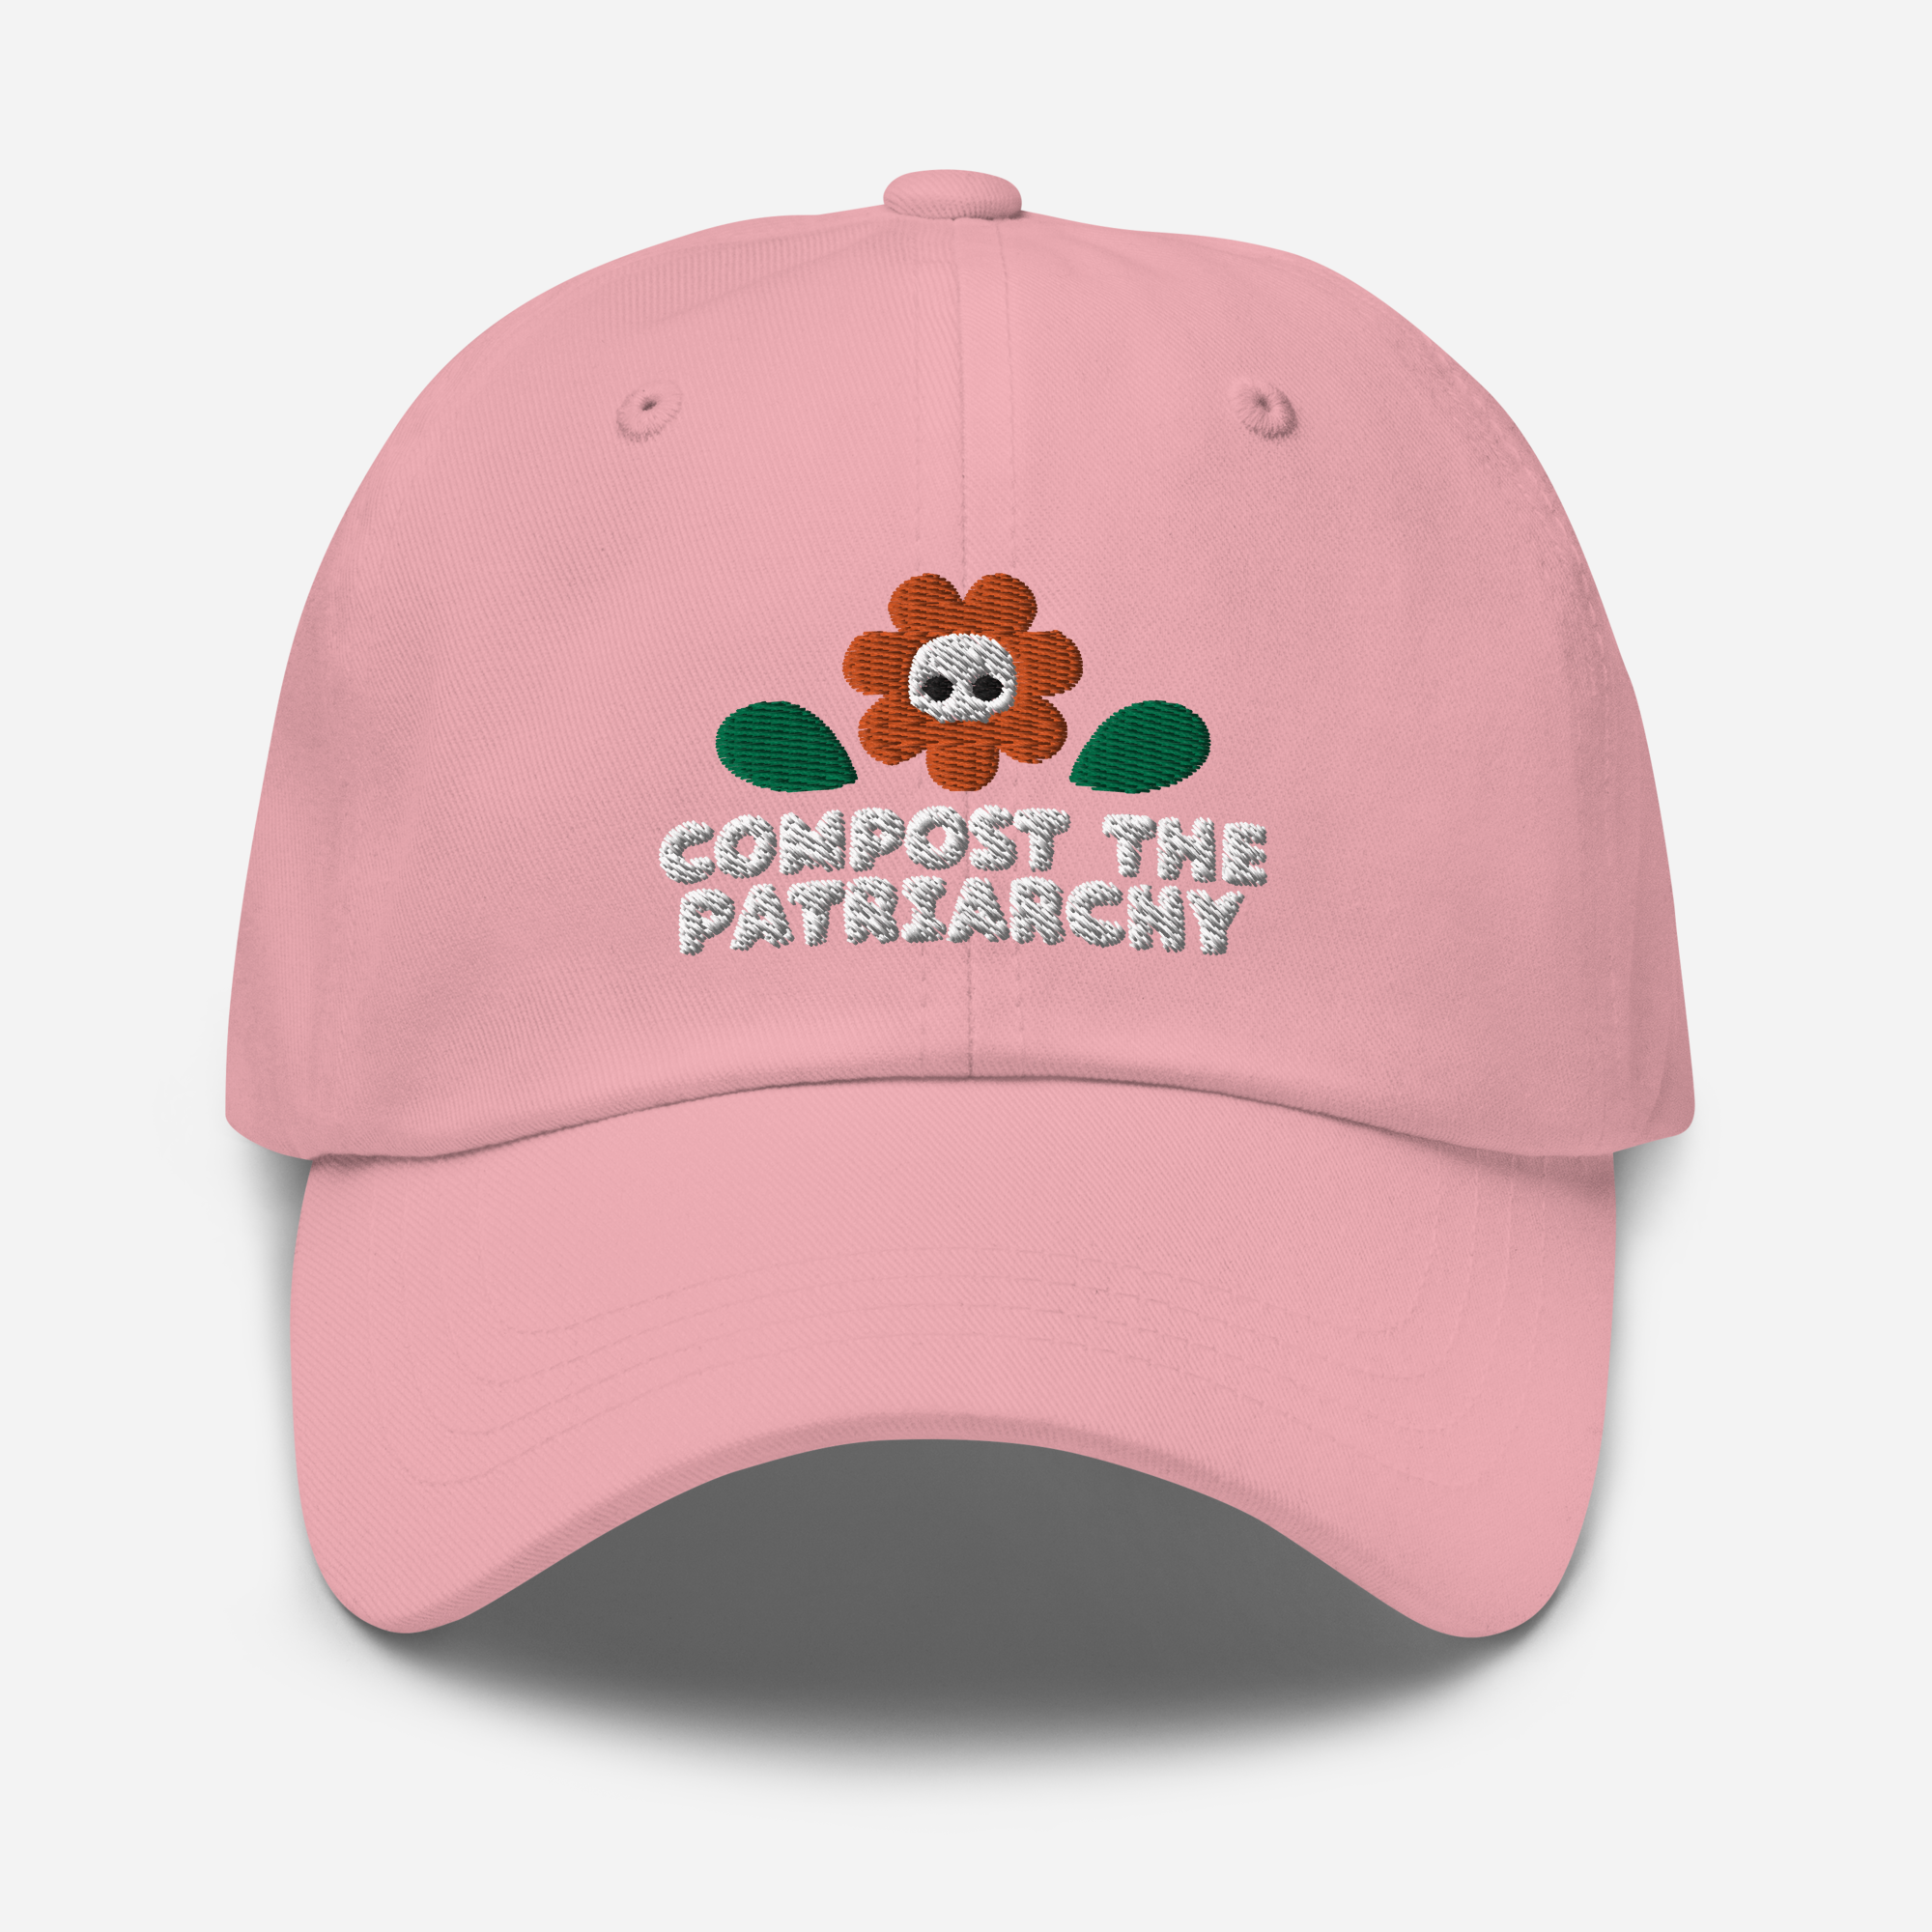 classic-dad-hat-pink-front-6417c74ec8672.png